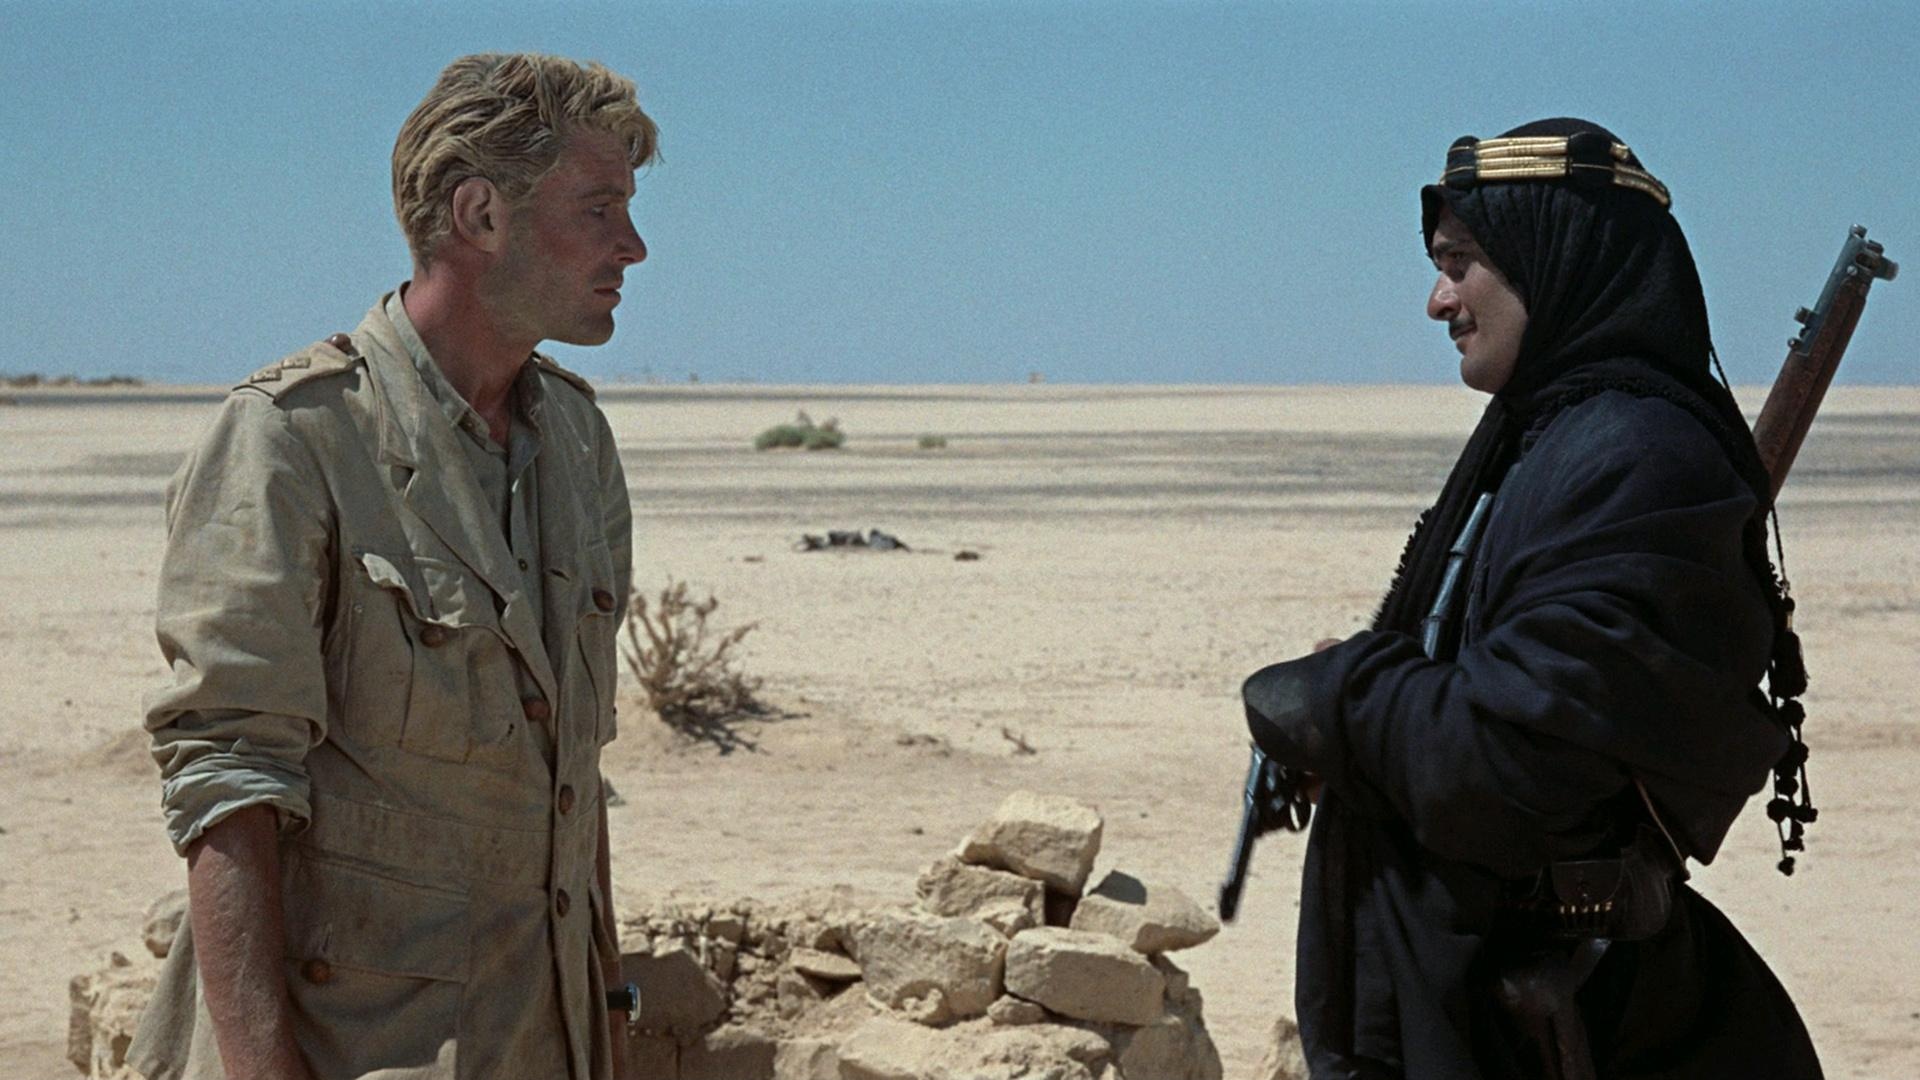 Lawrence of Arabia: Omar Sharif as Sherif Ali ibn el Kharish, Movie characters. 1920x1080 Full HD Background.